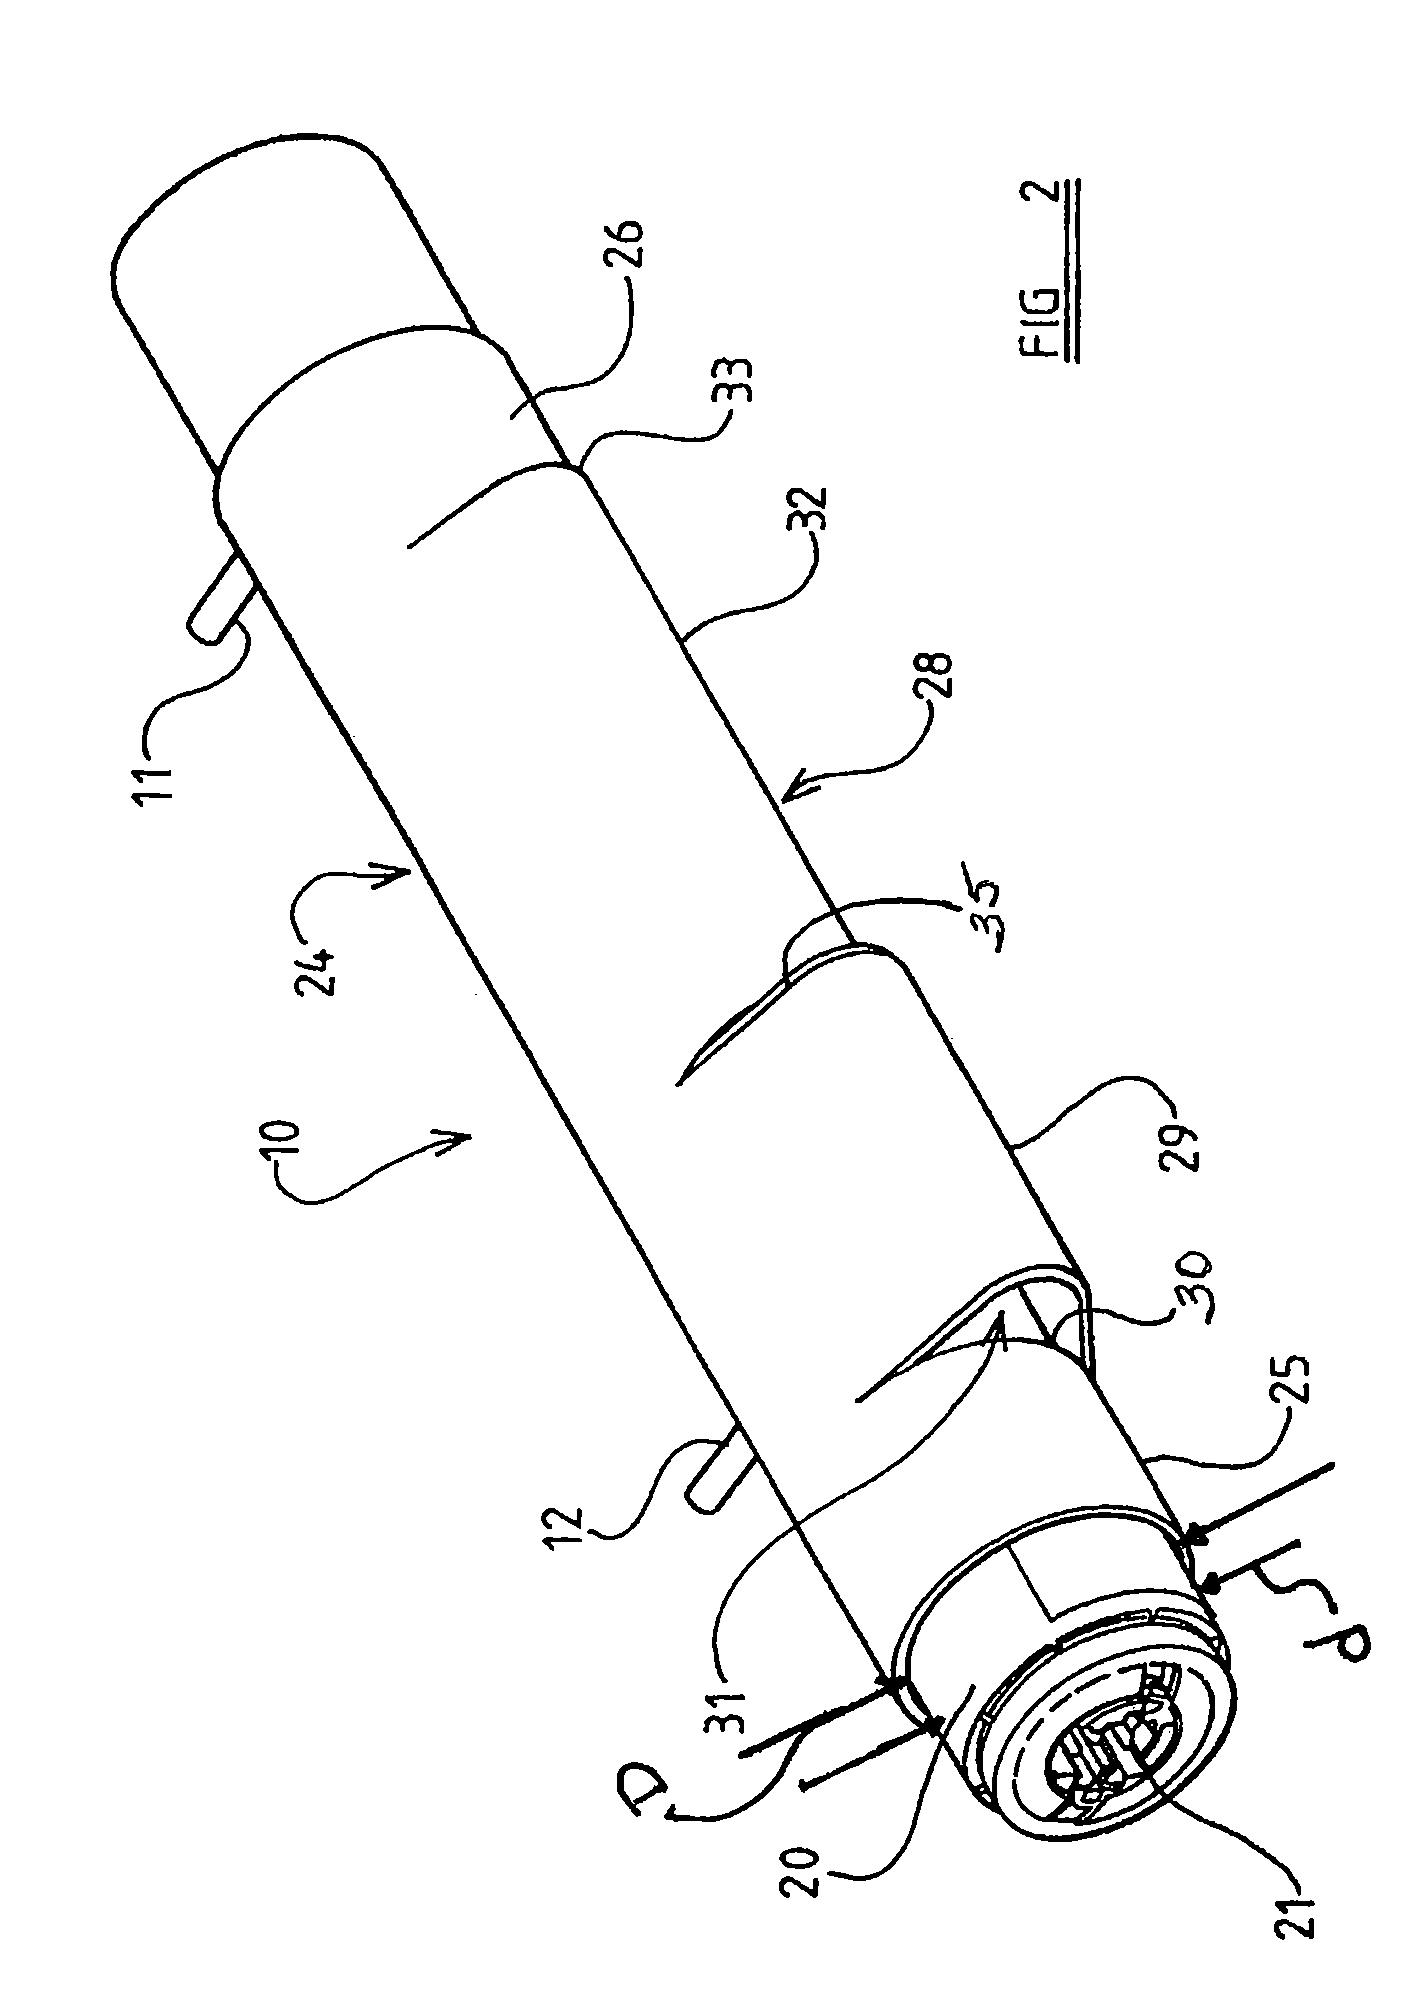 Gas deflector for an air-bag